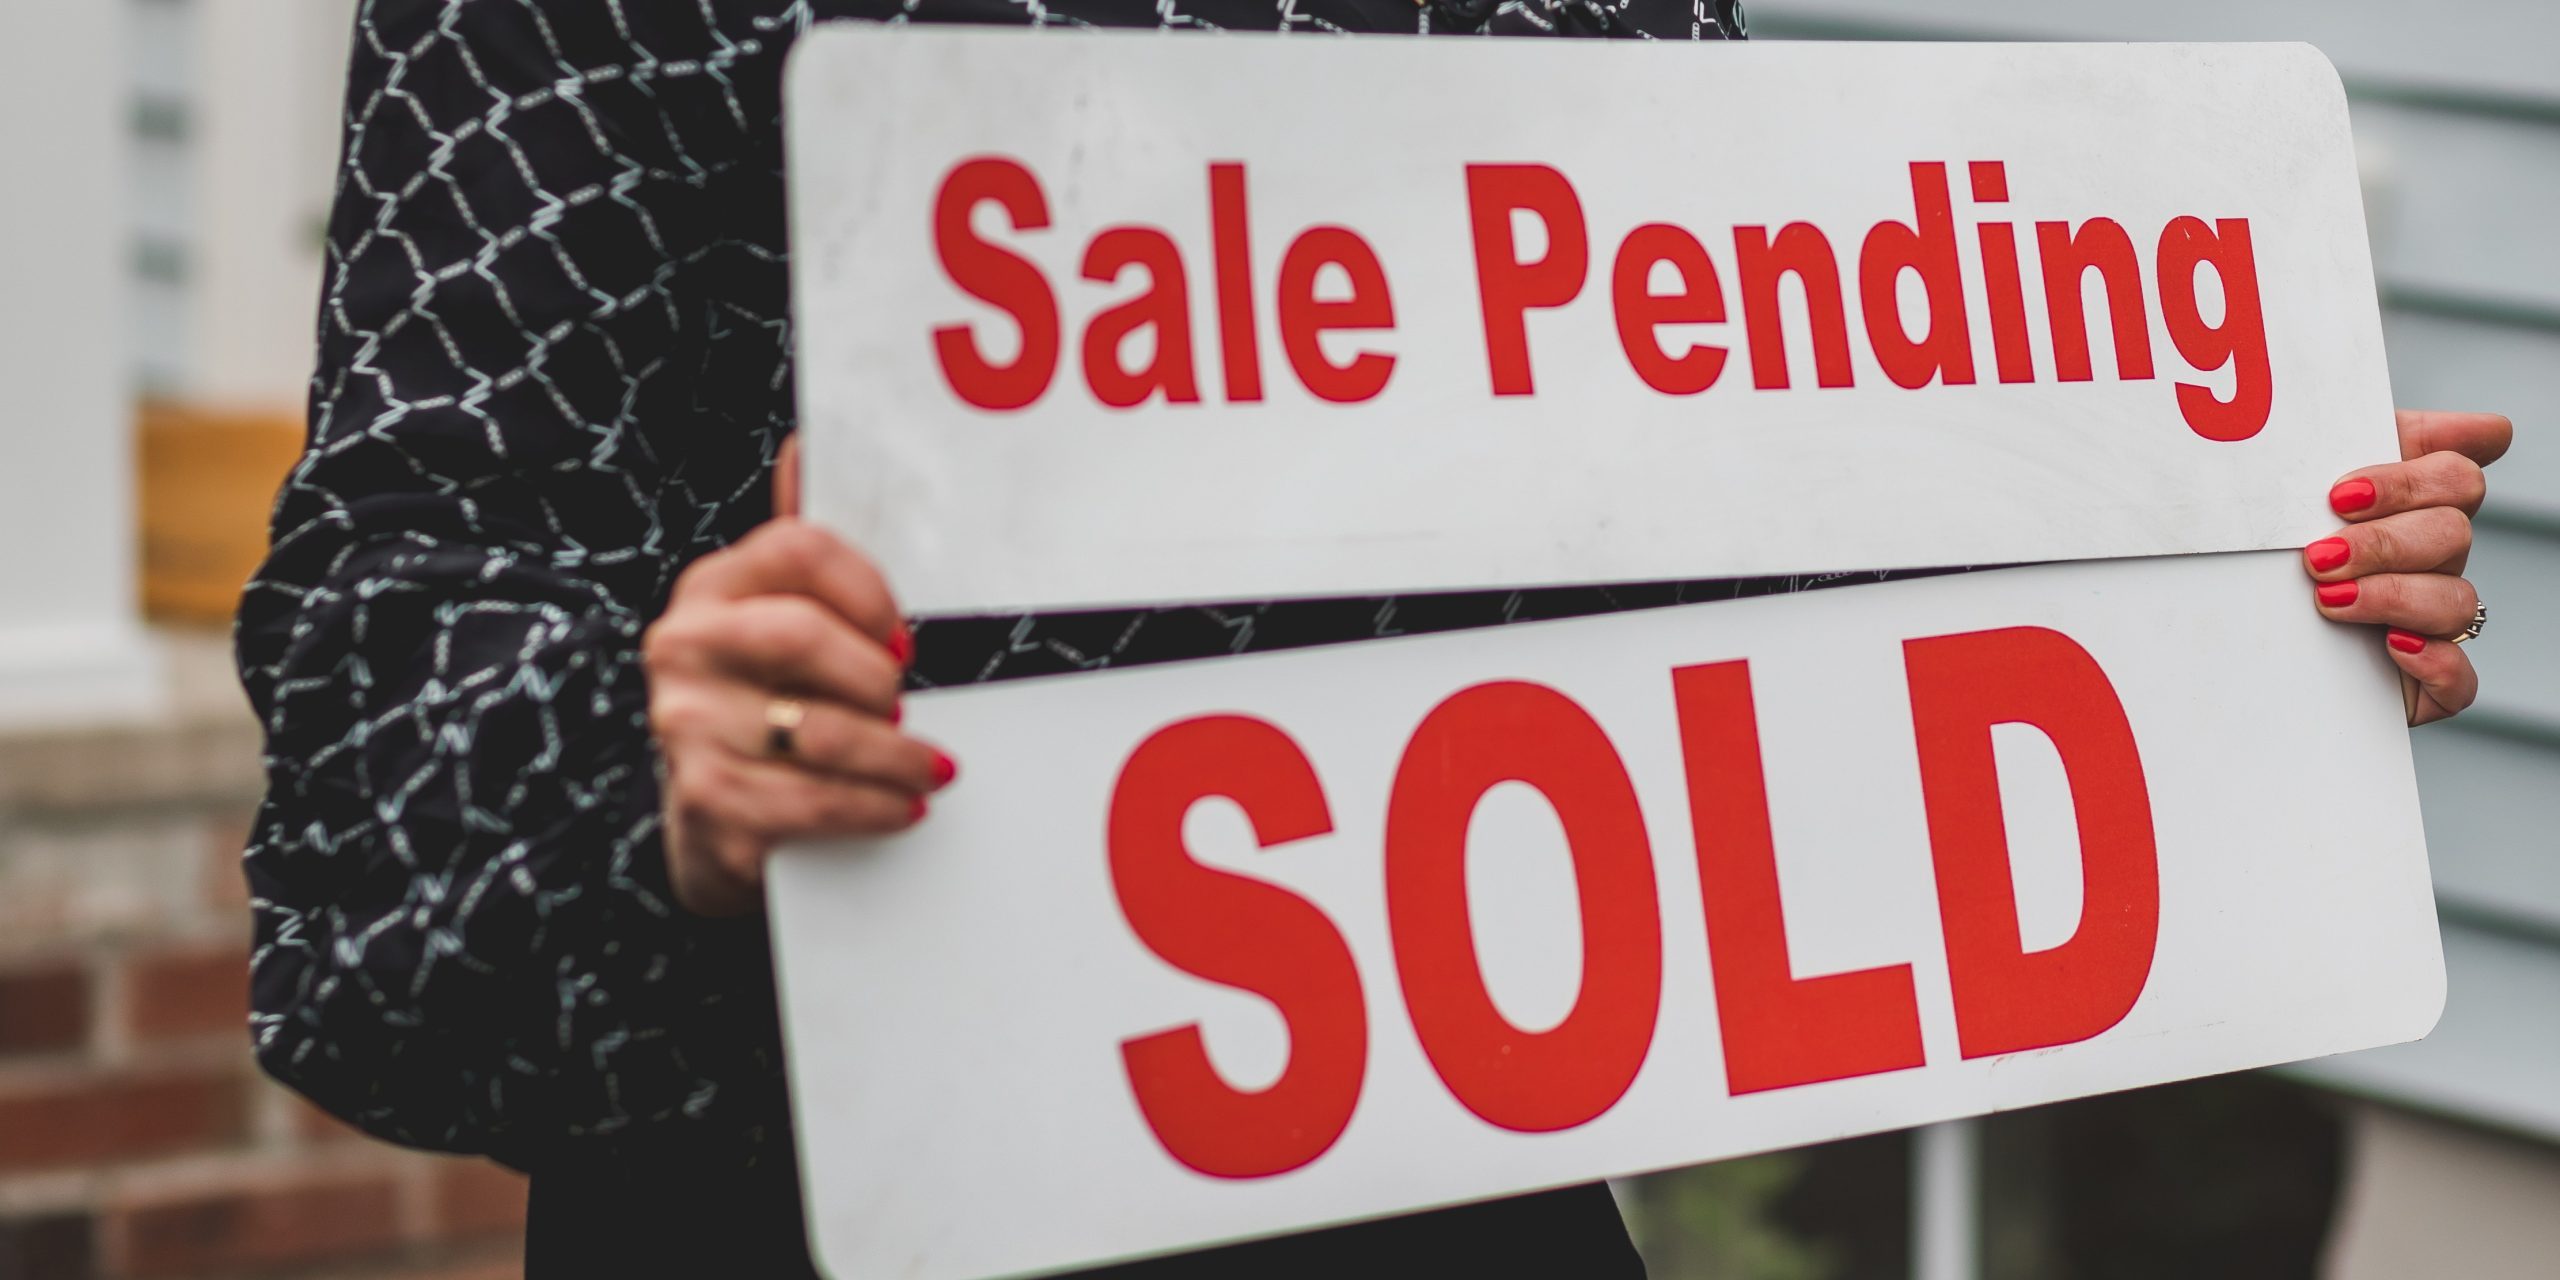 Home sales are down as balanced market returns to Hamilton-Burlington